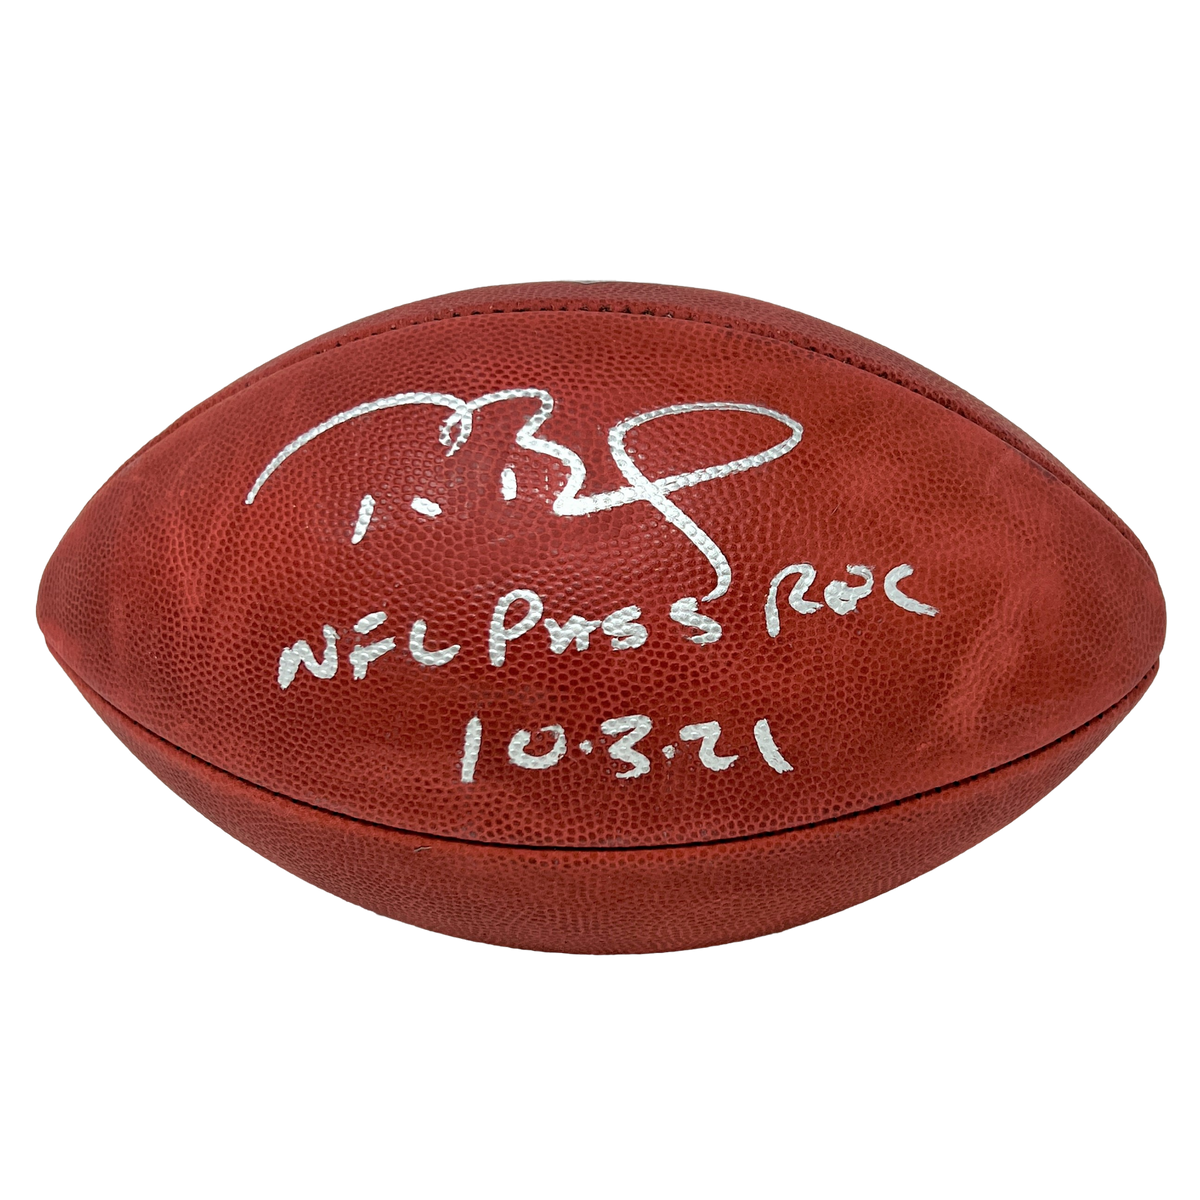 Tom Brady Autographed Footballs, Signed Tom Brady Inscripted Footballs